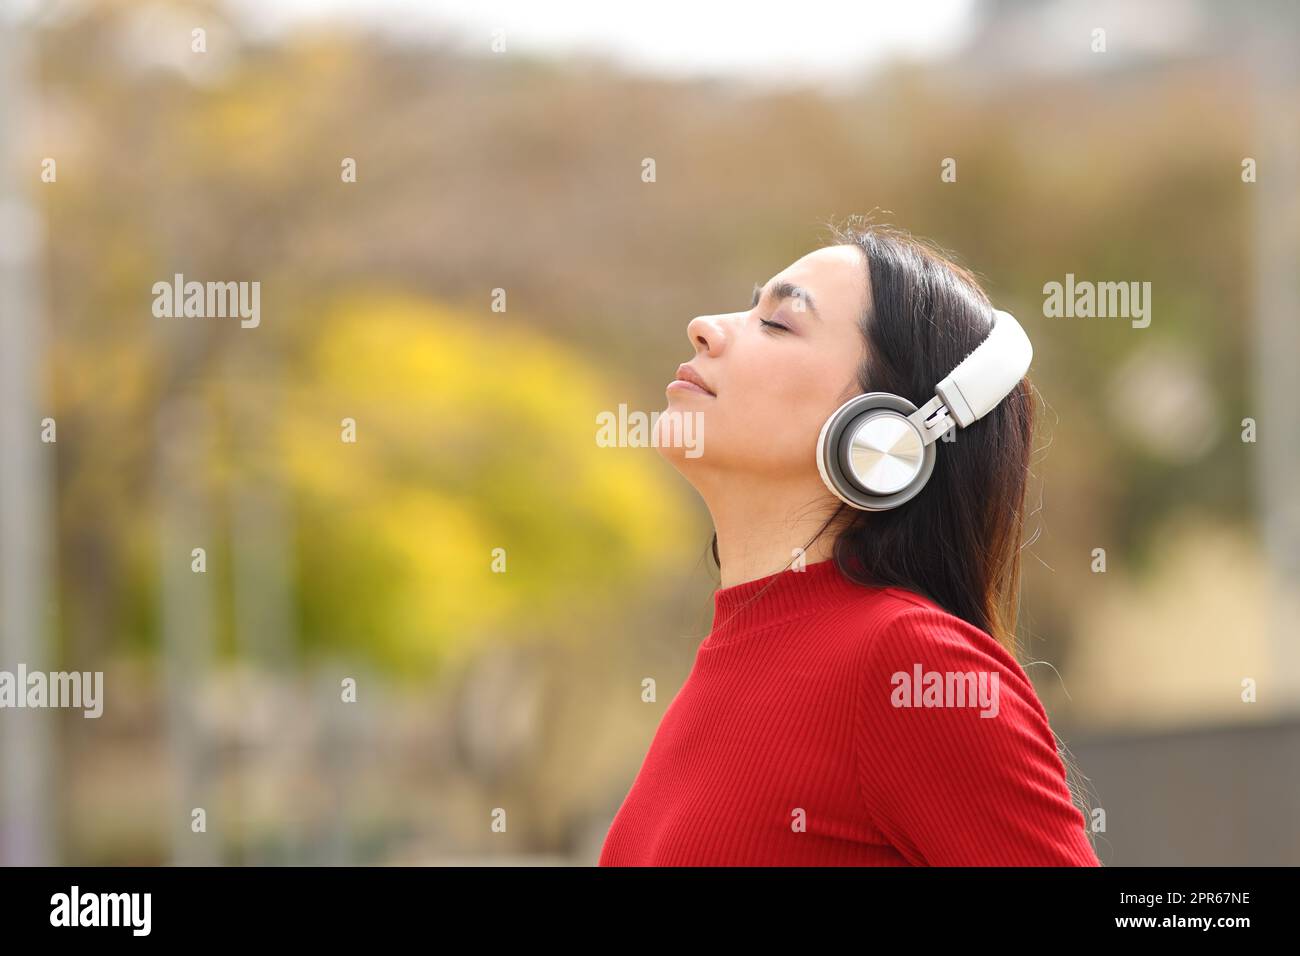 Woman in red wearing headphones meditating Stock Photo